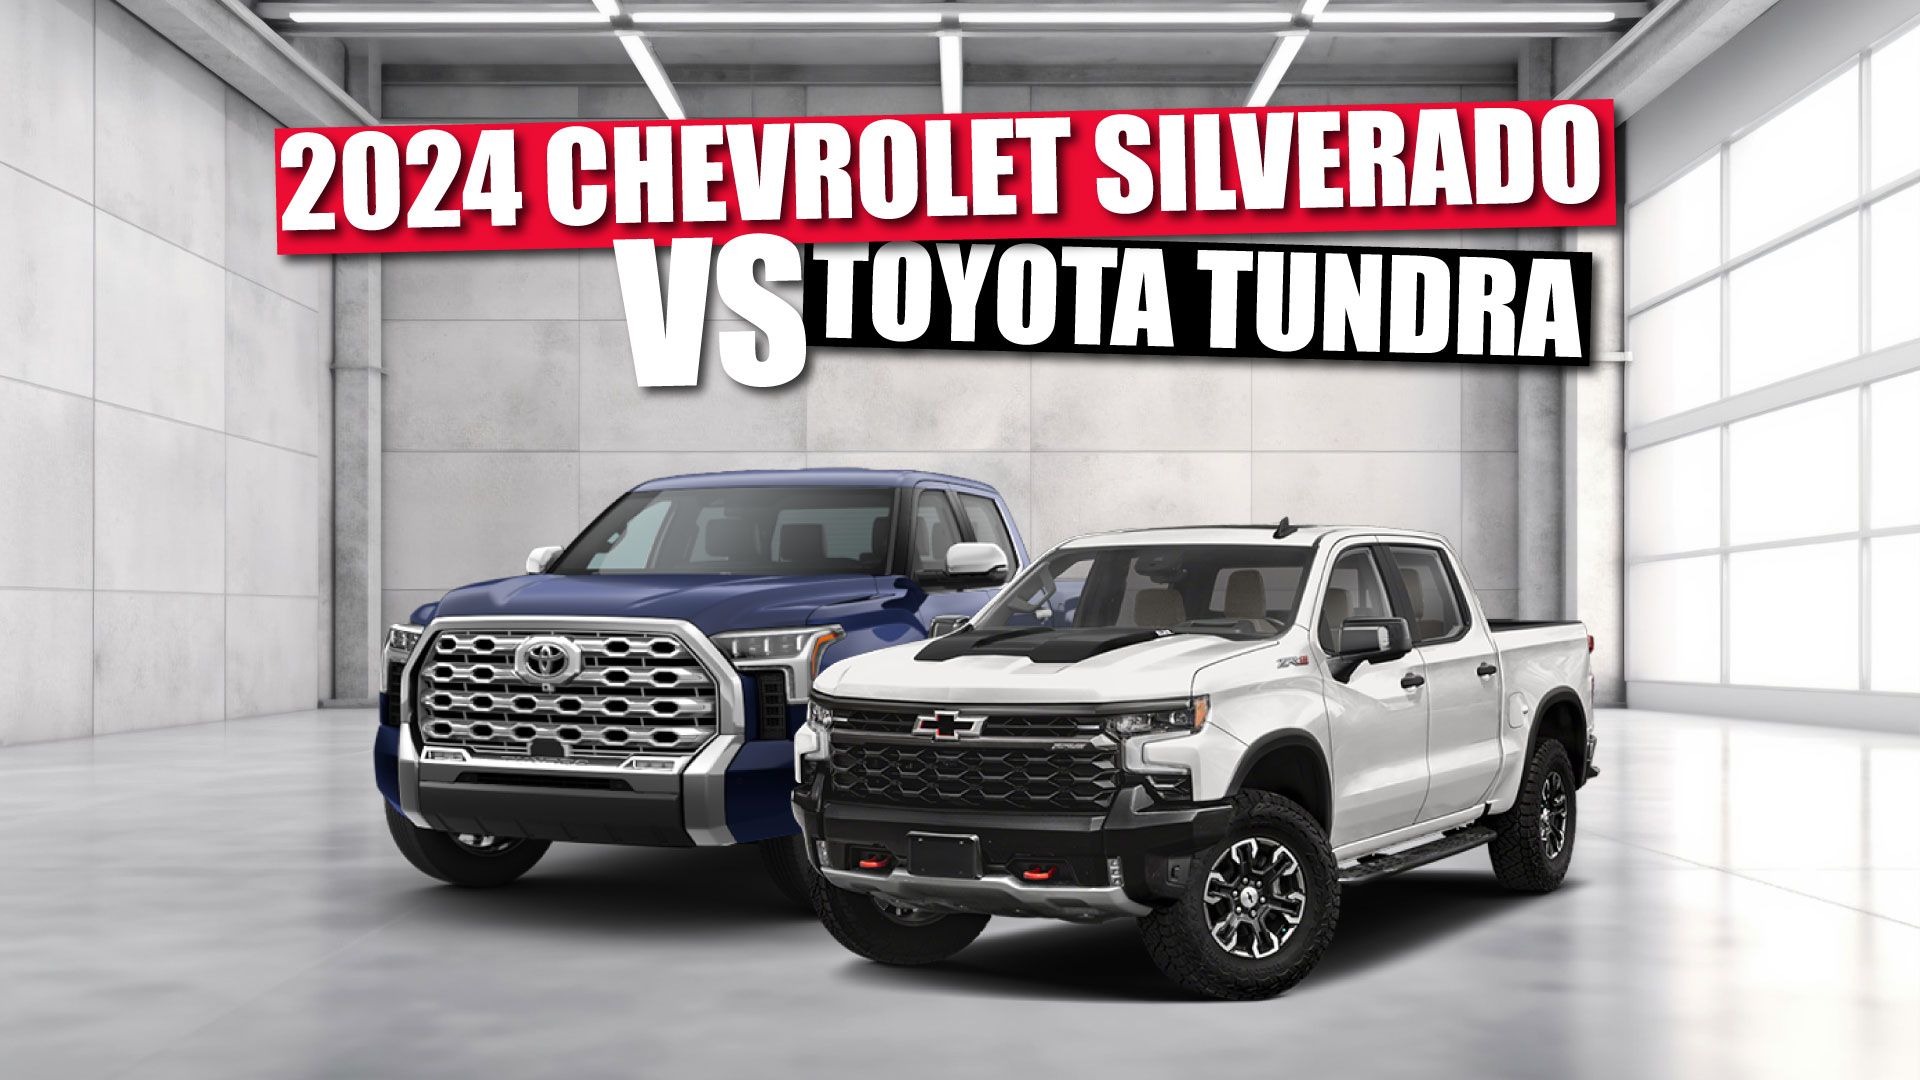 2024 Chevrolet Silverado vs Toyota Tundra